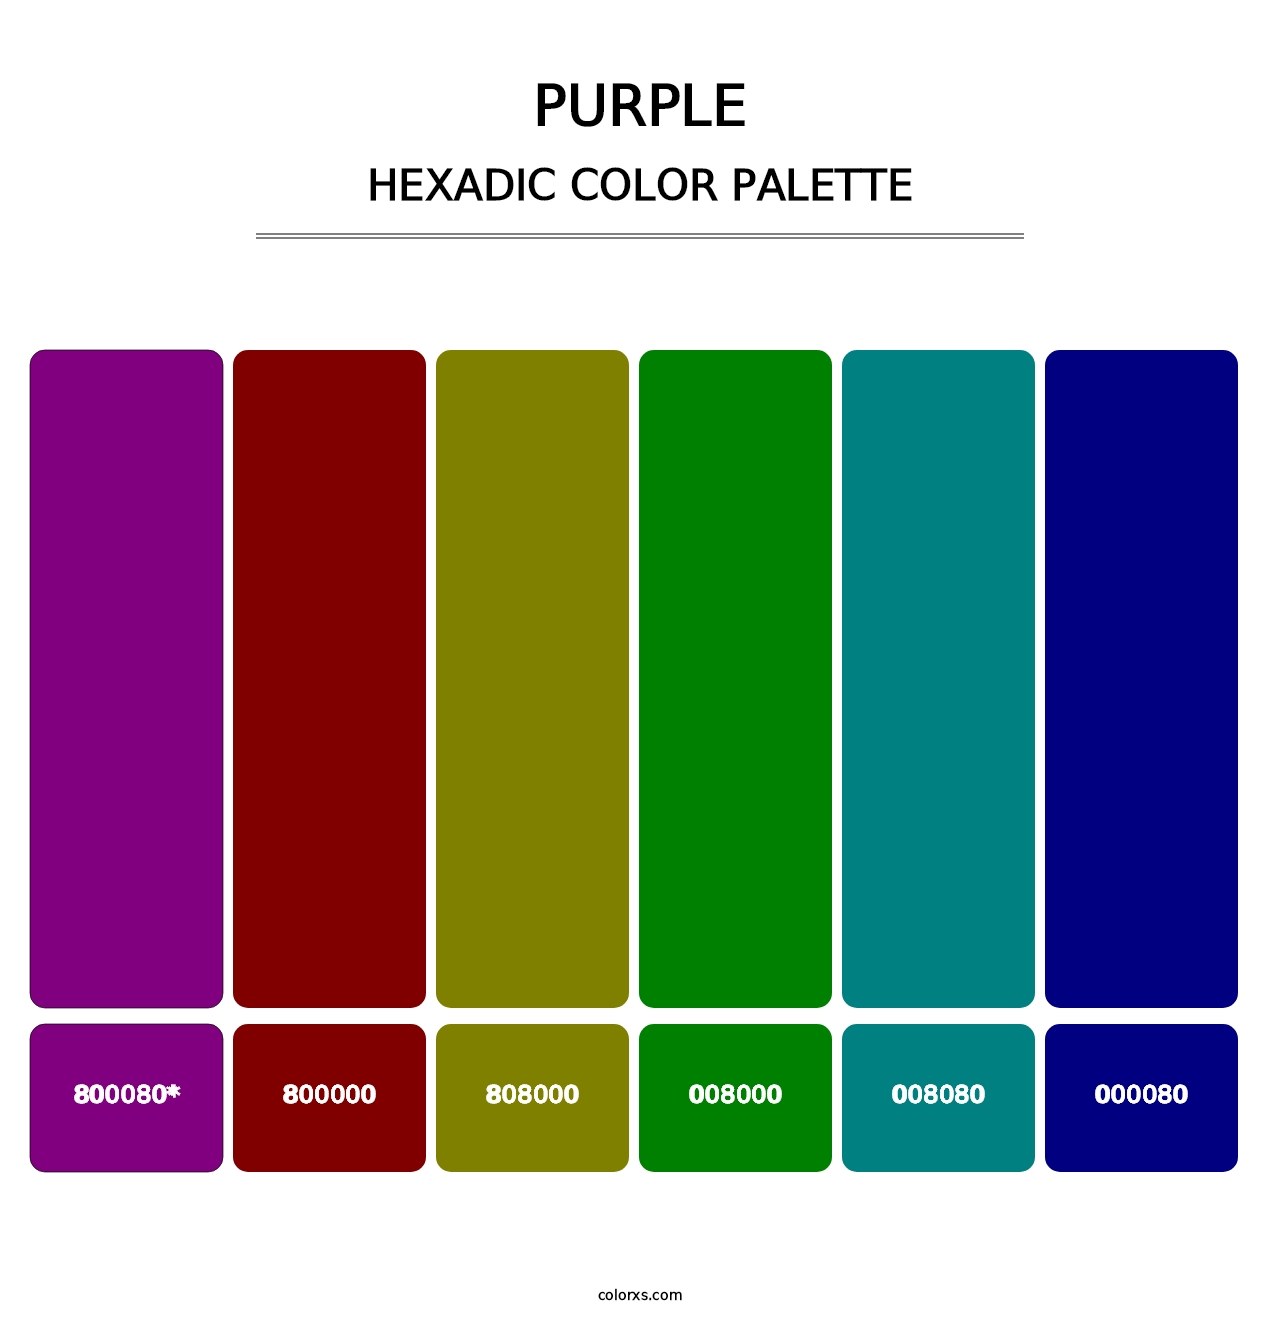 Purple - Hexadic Color Palette